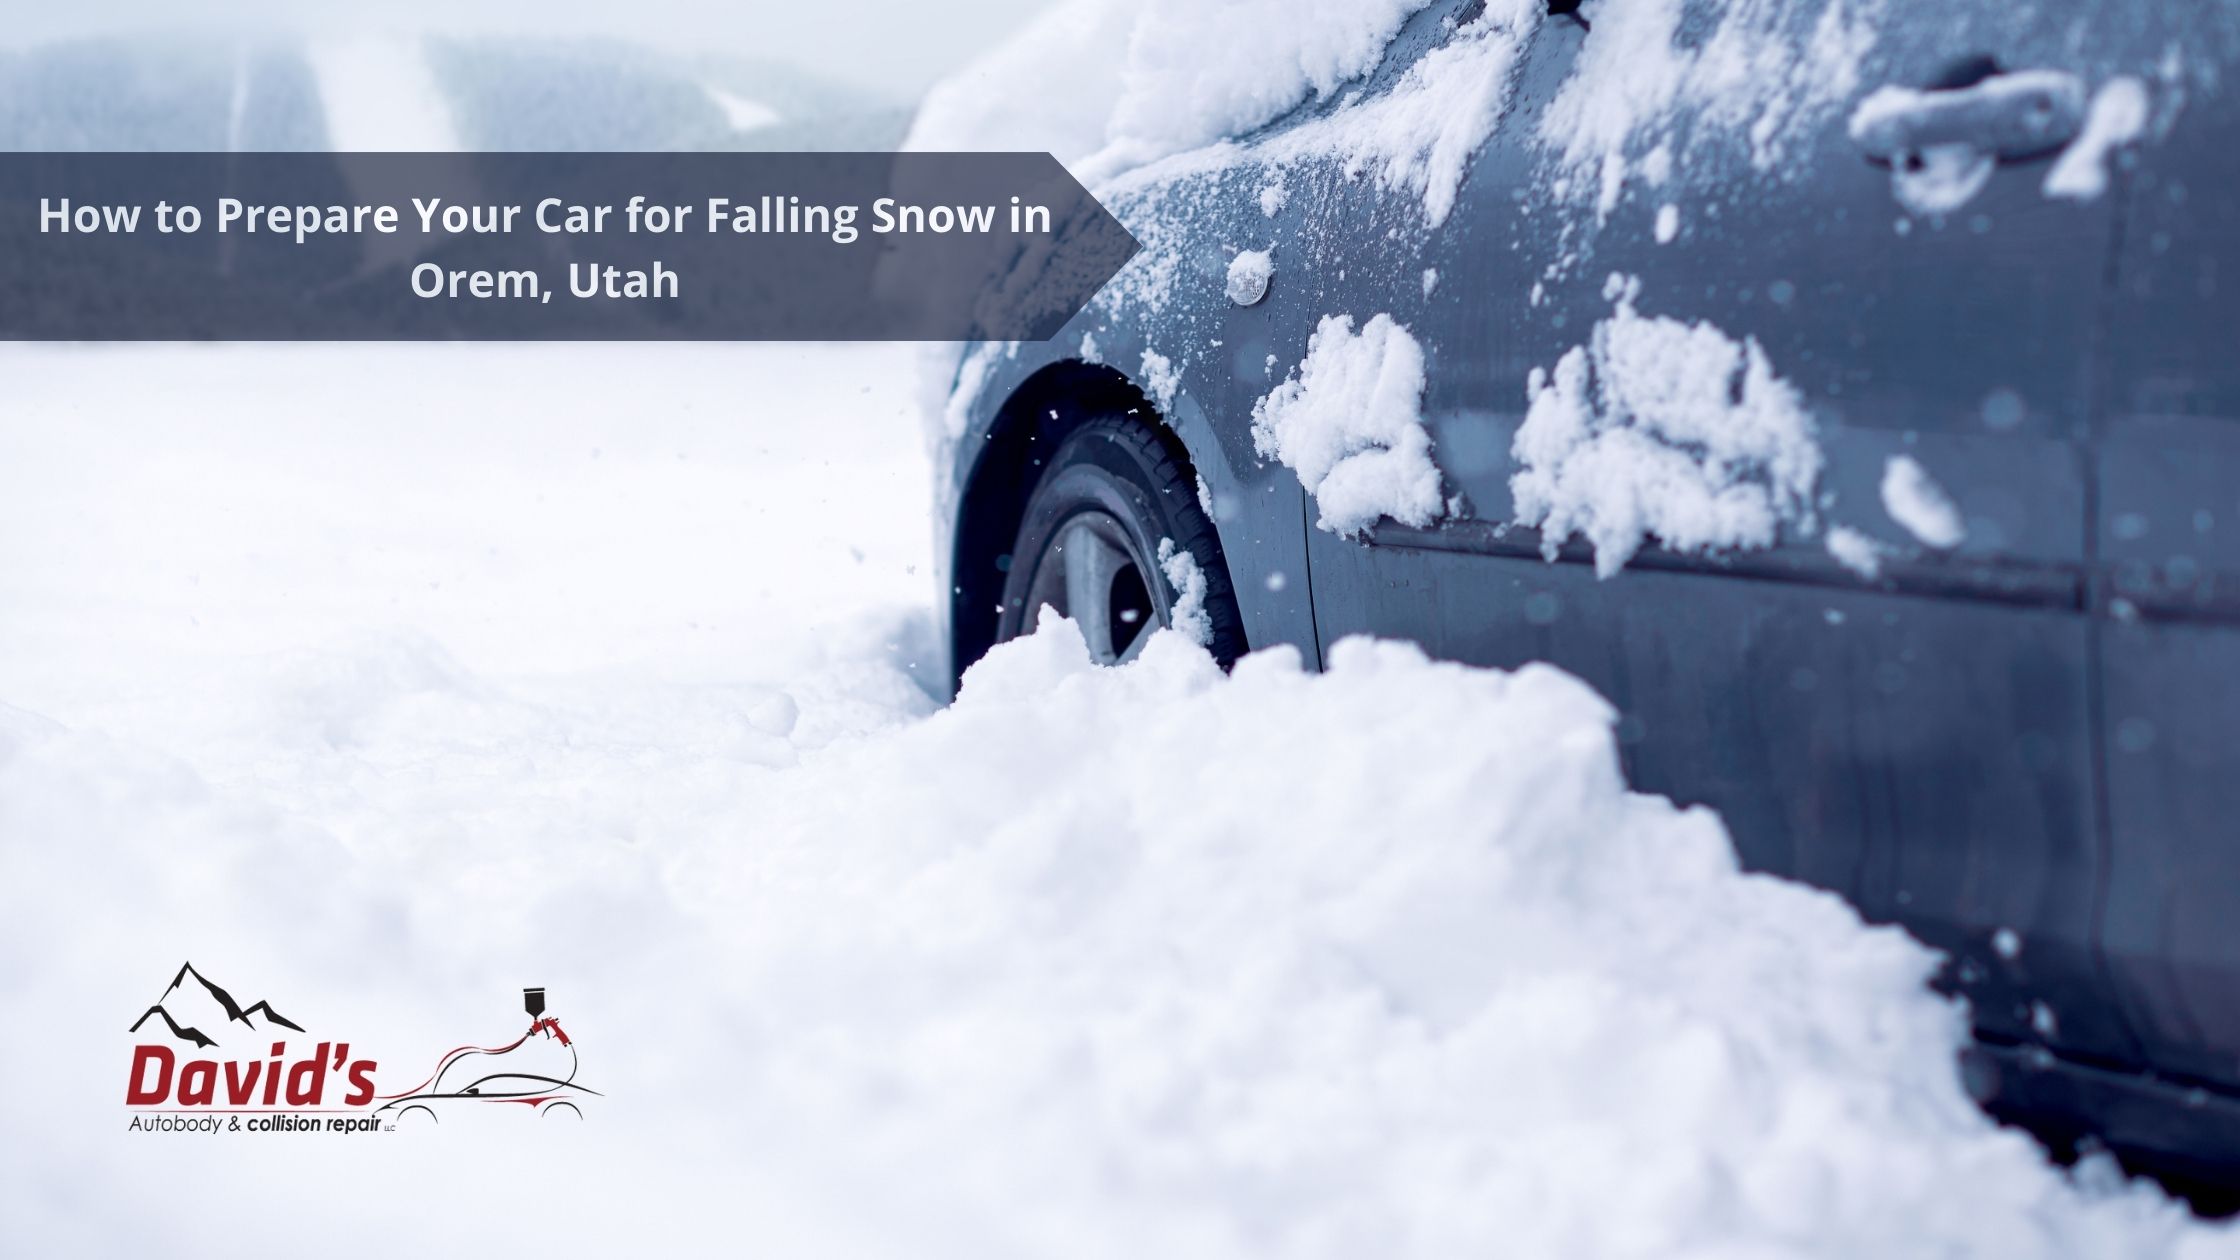 How to Prepare Your Car for Falling Snow in Orem, Utah